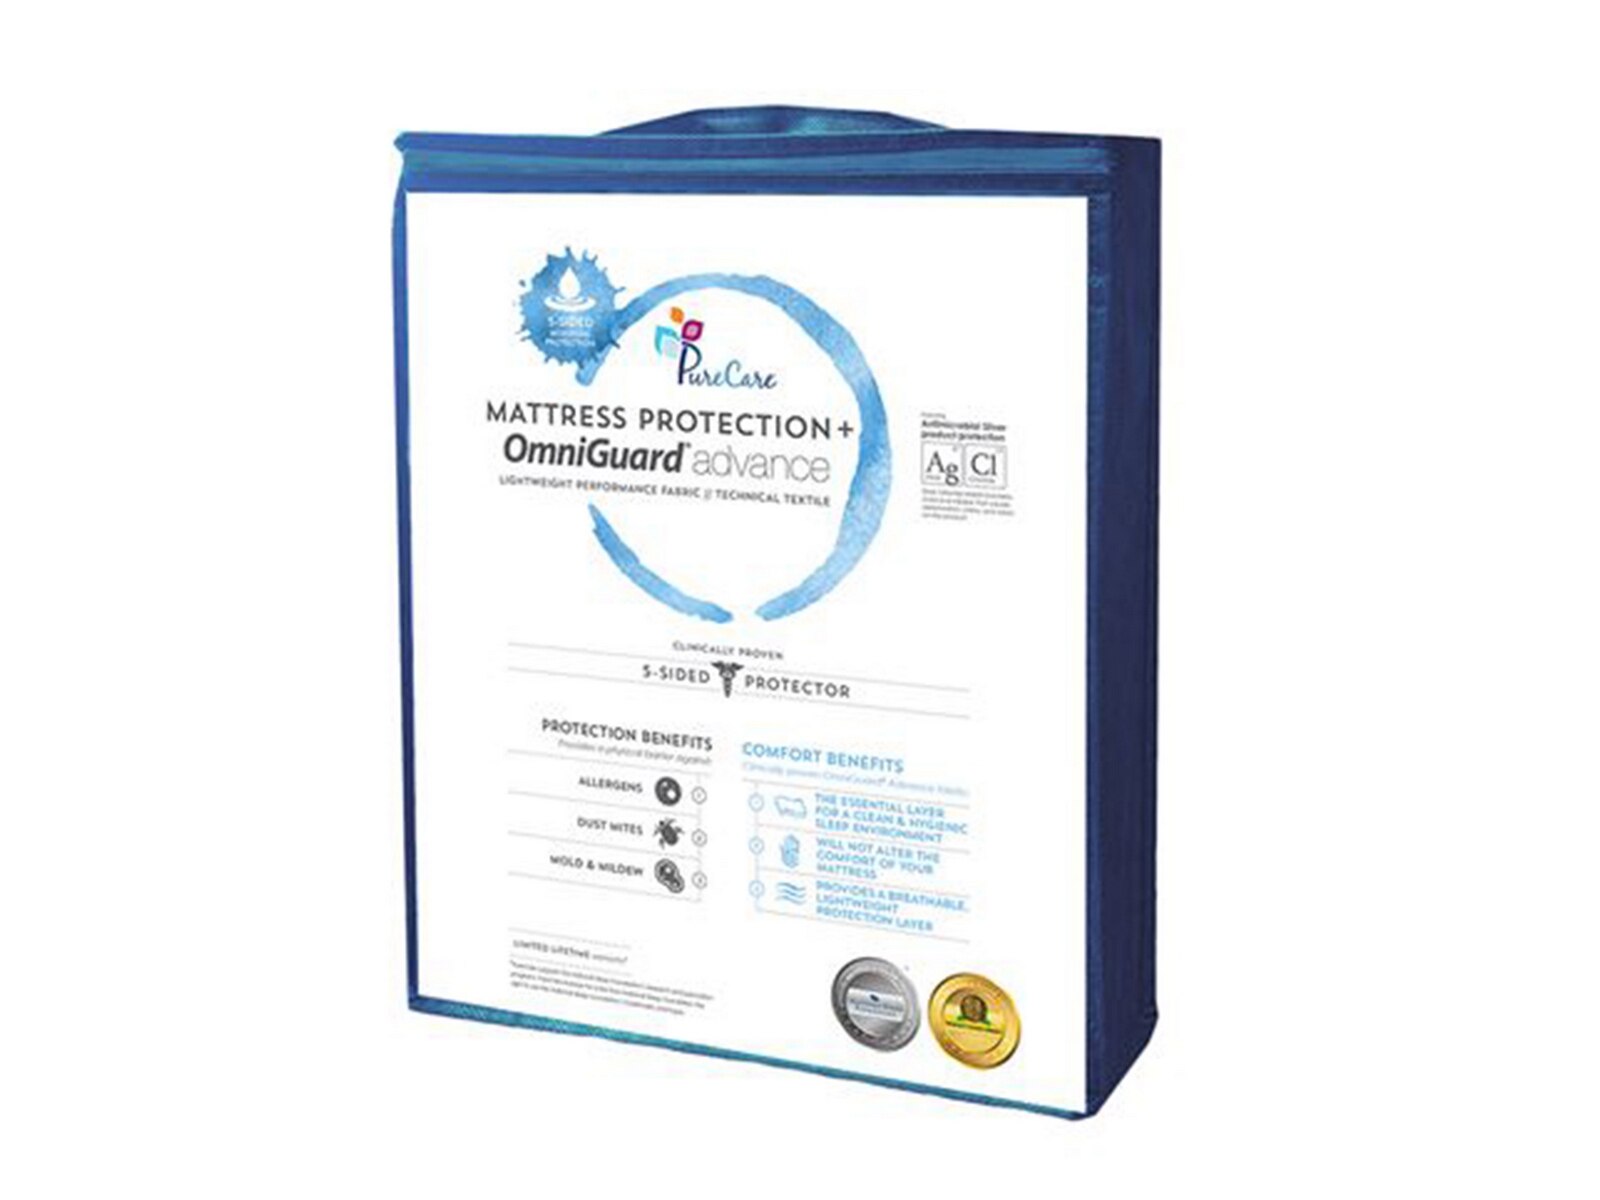 purecare frio 5-sided waterproof mattress protector reviews